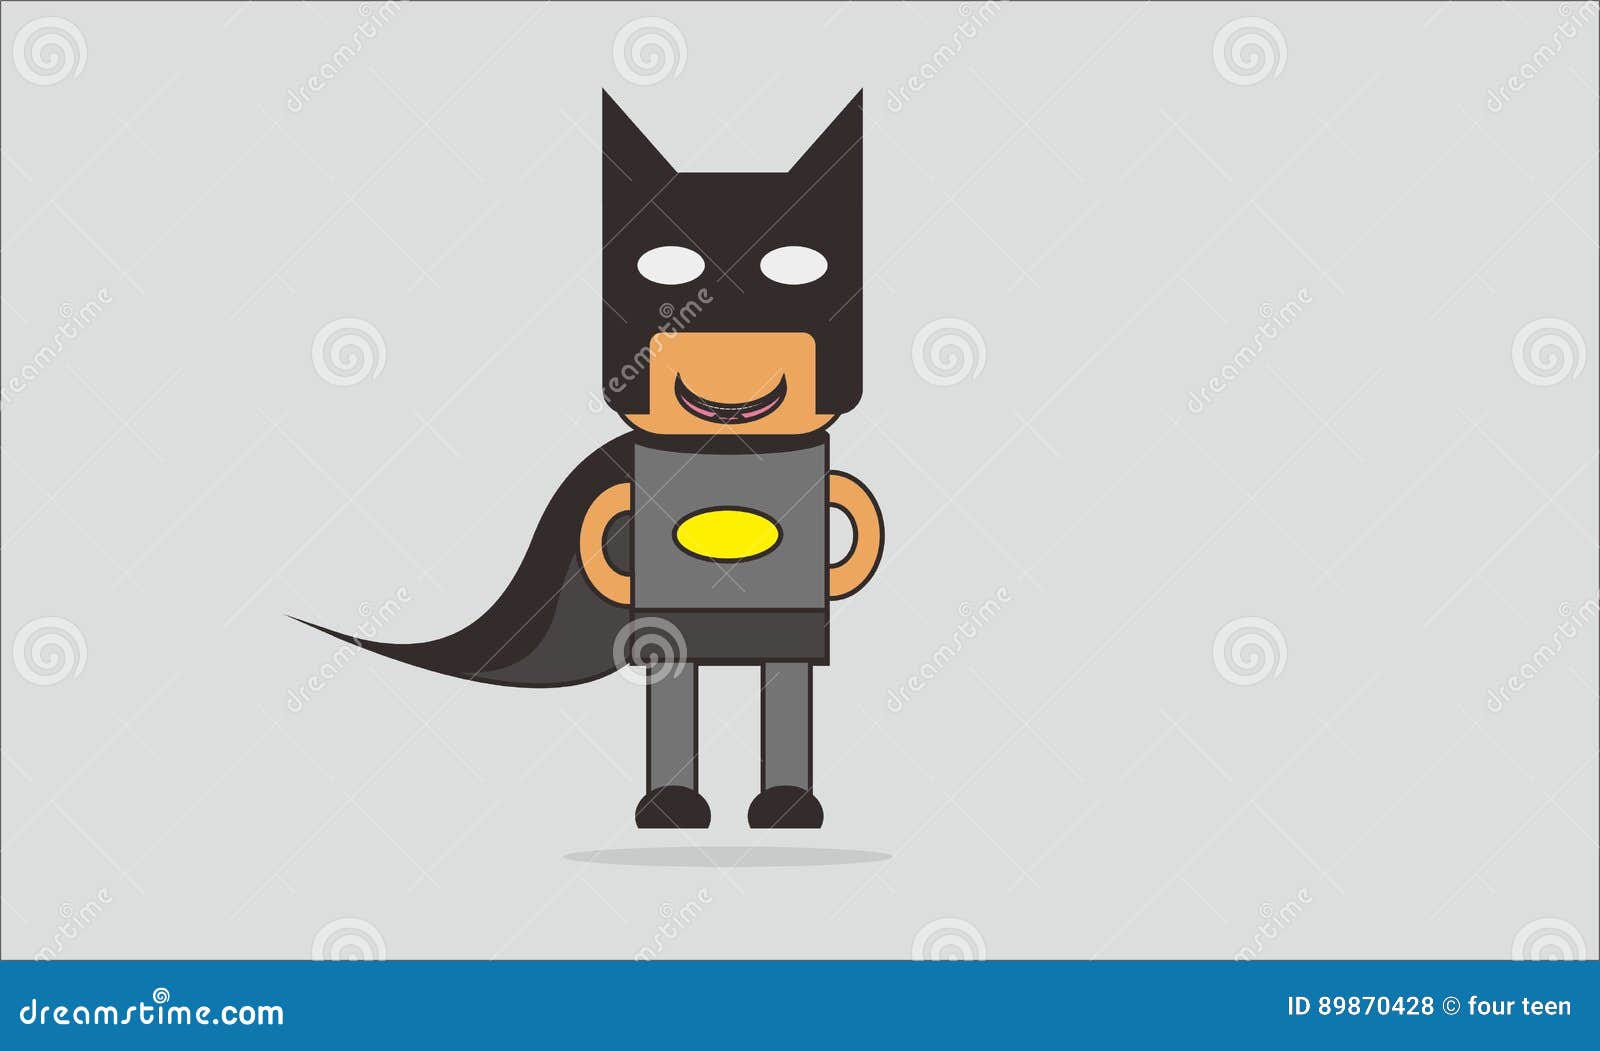 Batman carton stock illustration. Illustration of funny - 89870428